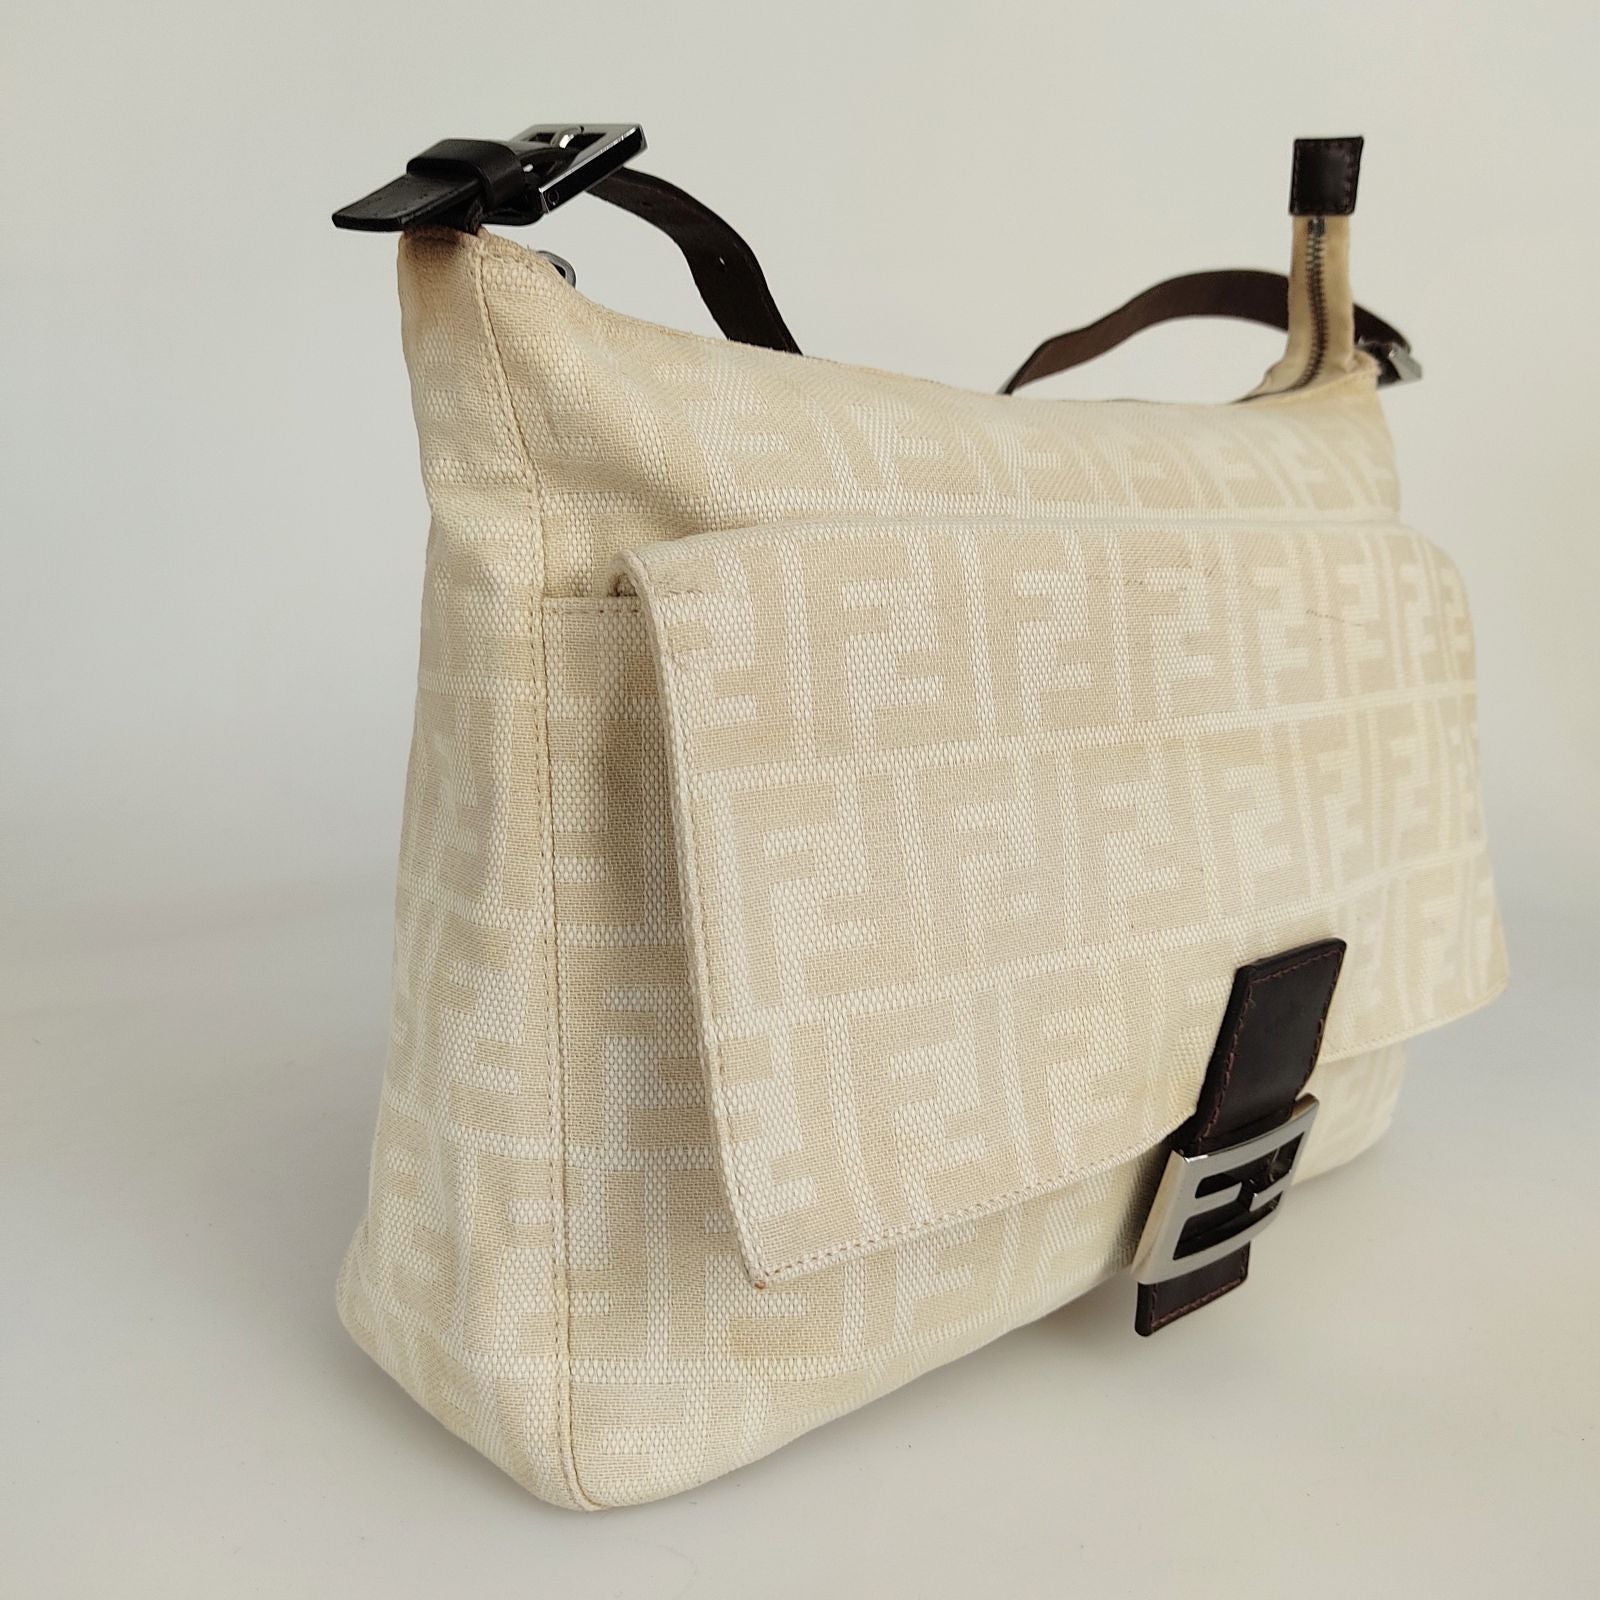 Fendi Fendi Mamma shoulder bag in beige monogram canvas - '10s